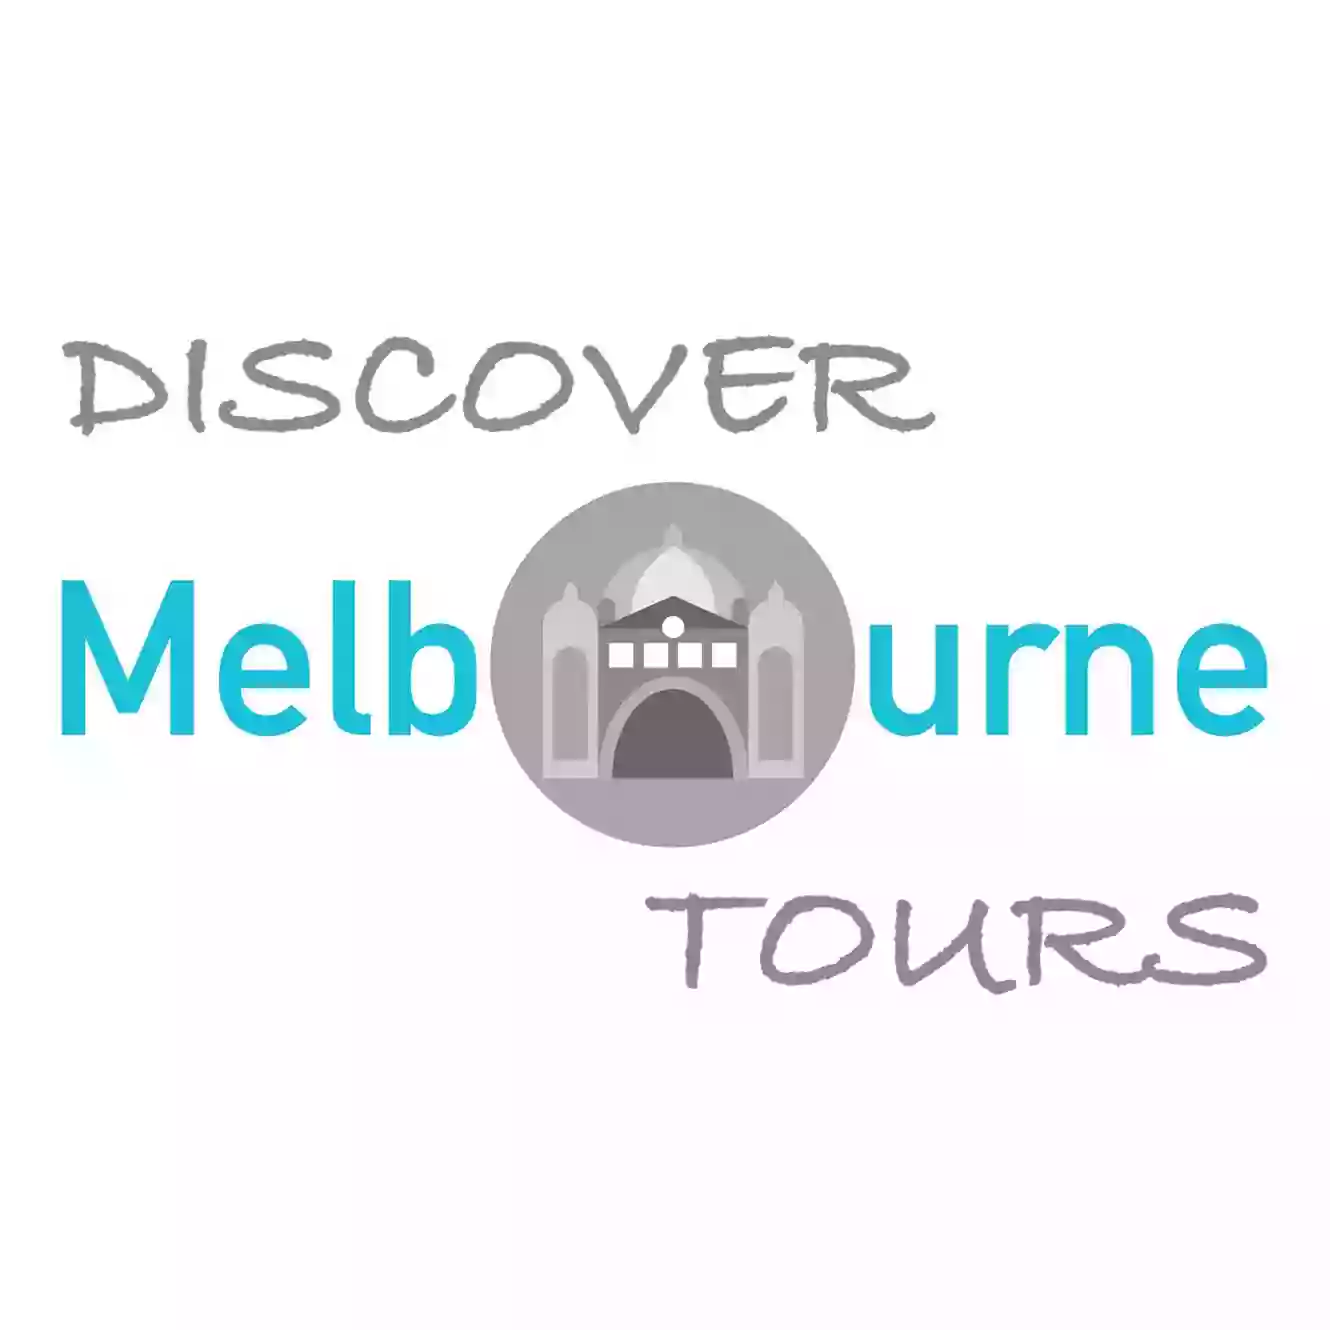 Discover Melbourne Tours